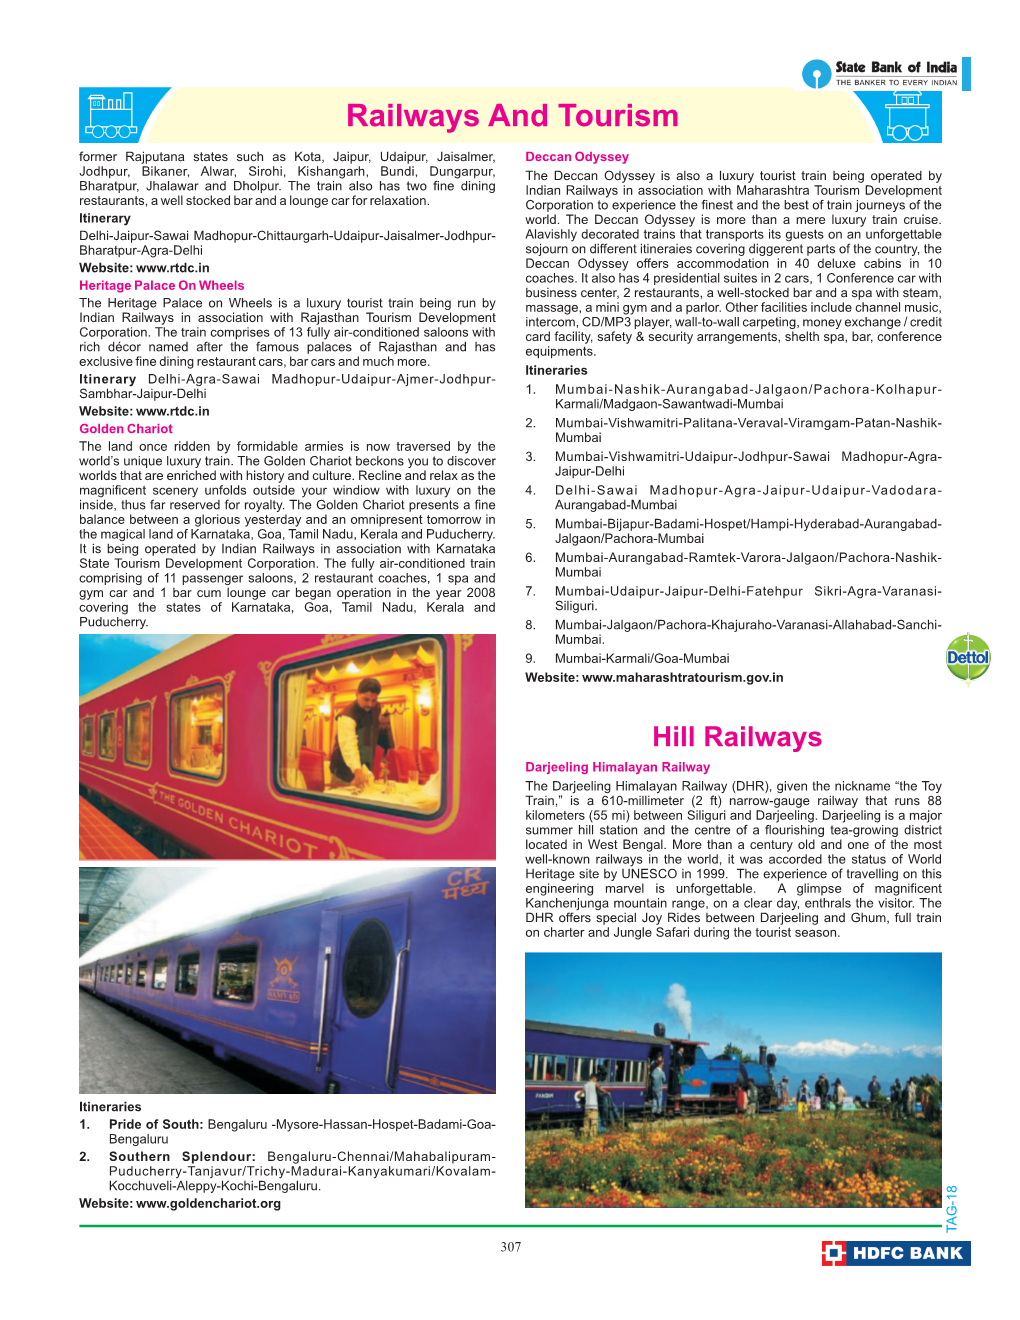 Railways and Tourism